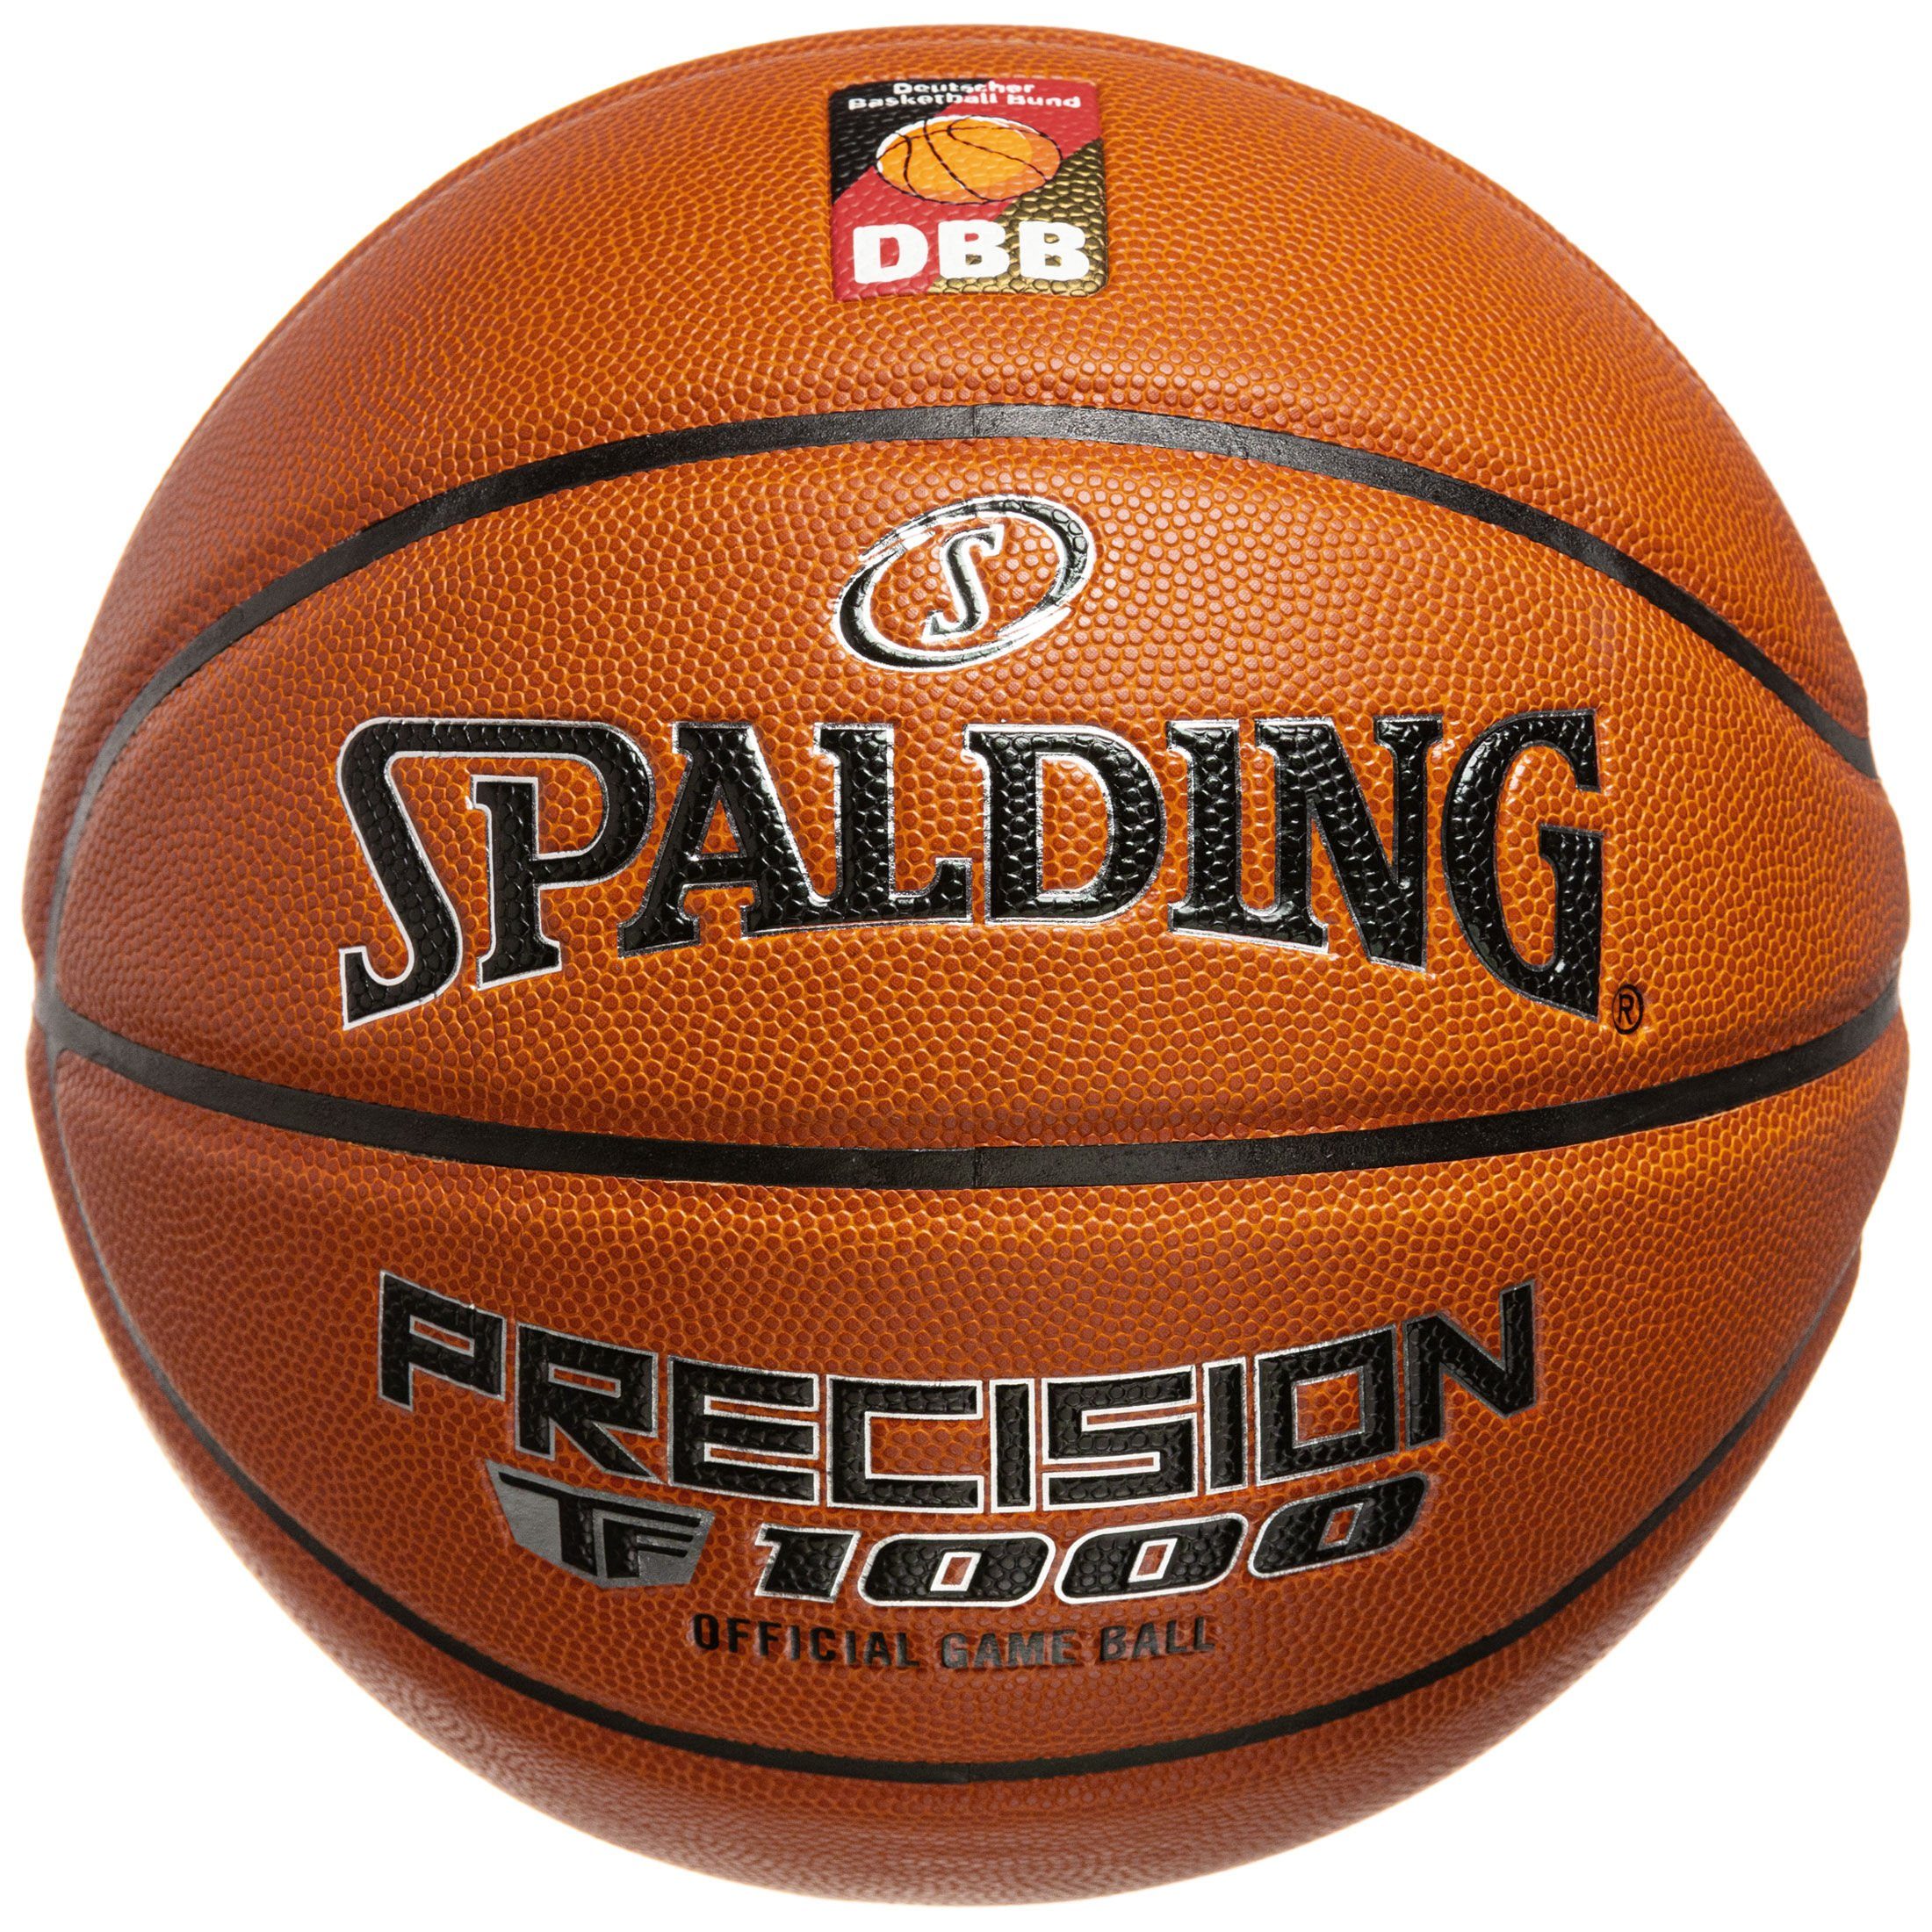 Spalding Basketball DBB TF-1000 Basketball Precision